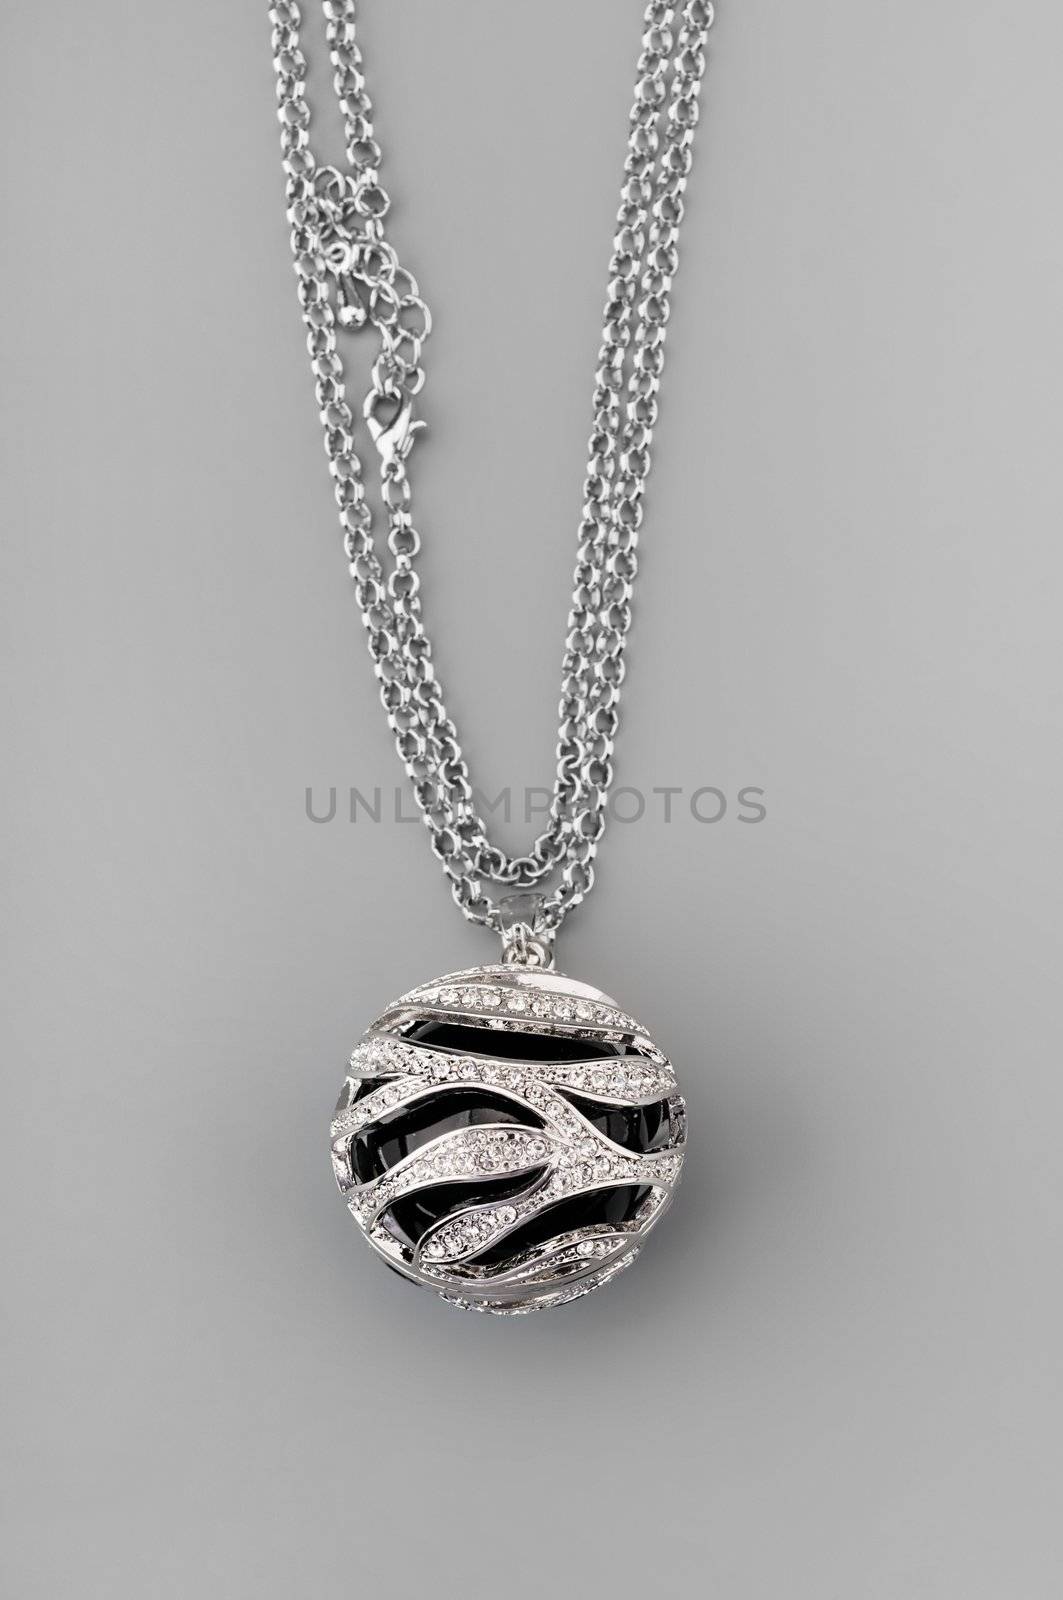 Silver pendant by nikitabuida